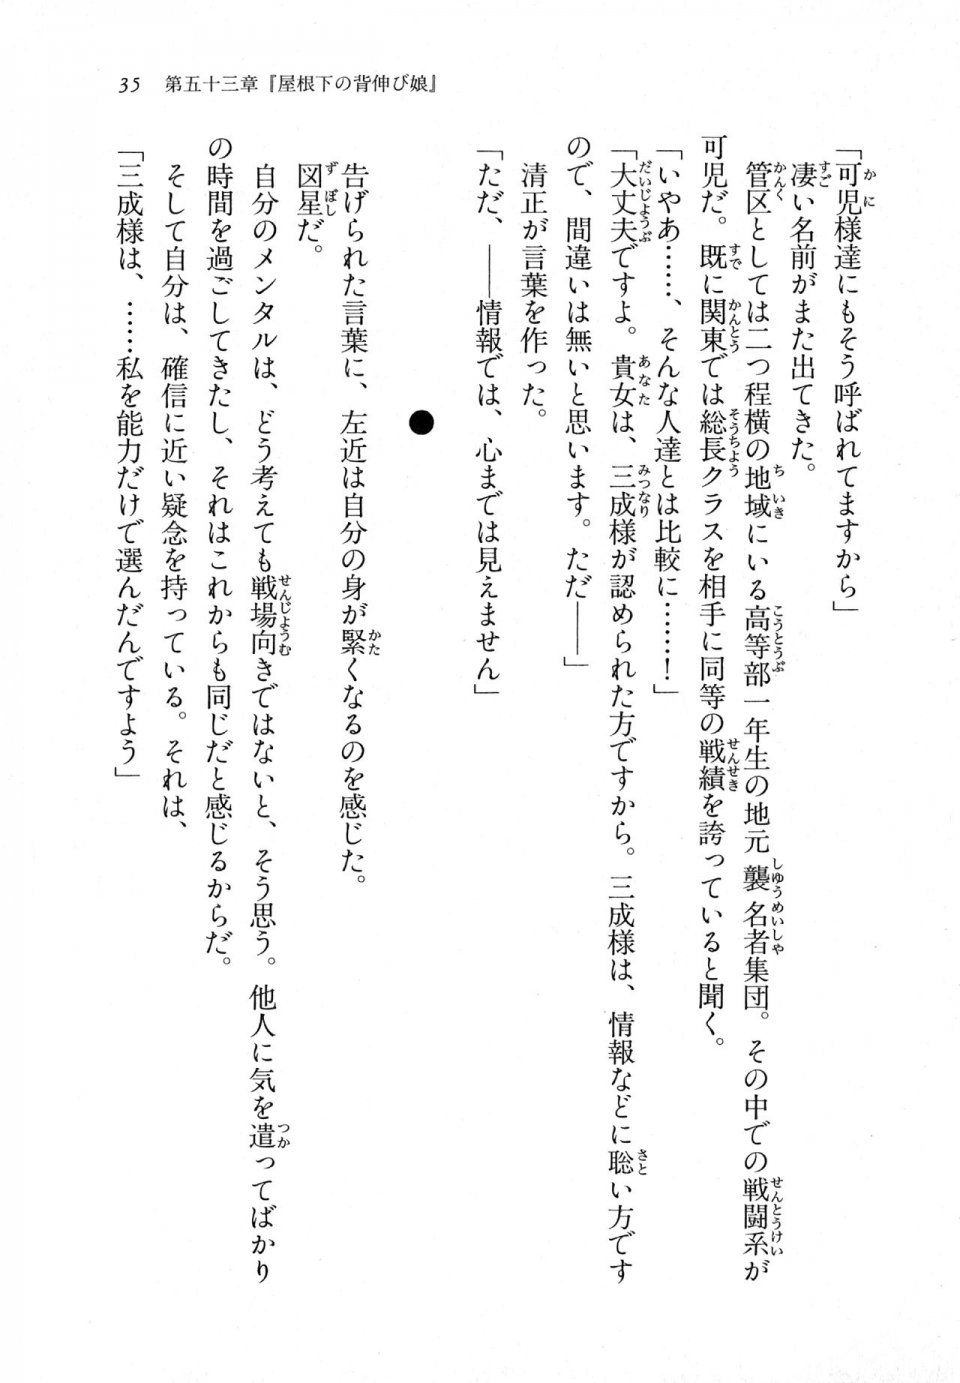 Kyoukai Senjou no Horizon LN Vol 18(7C) Part 1 - Photo #35